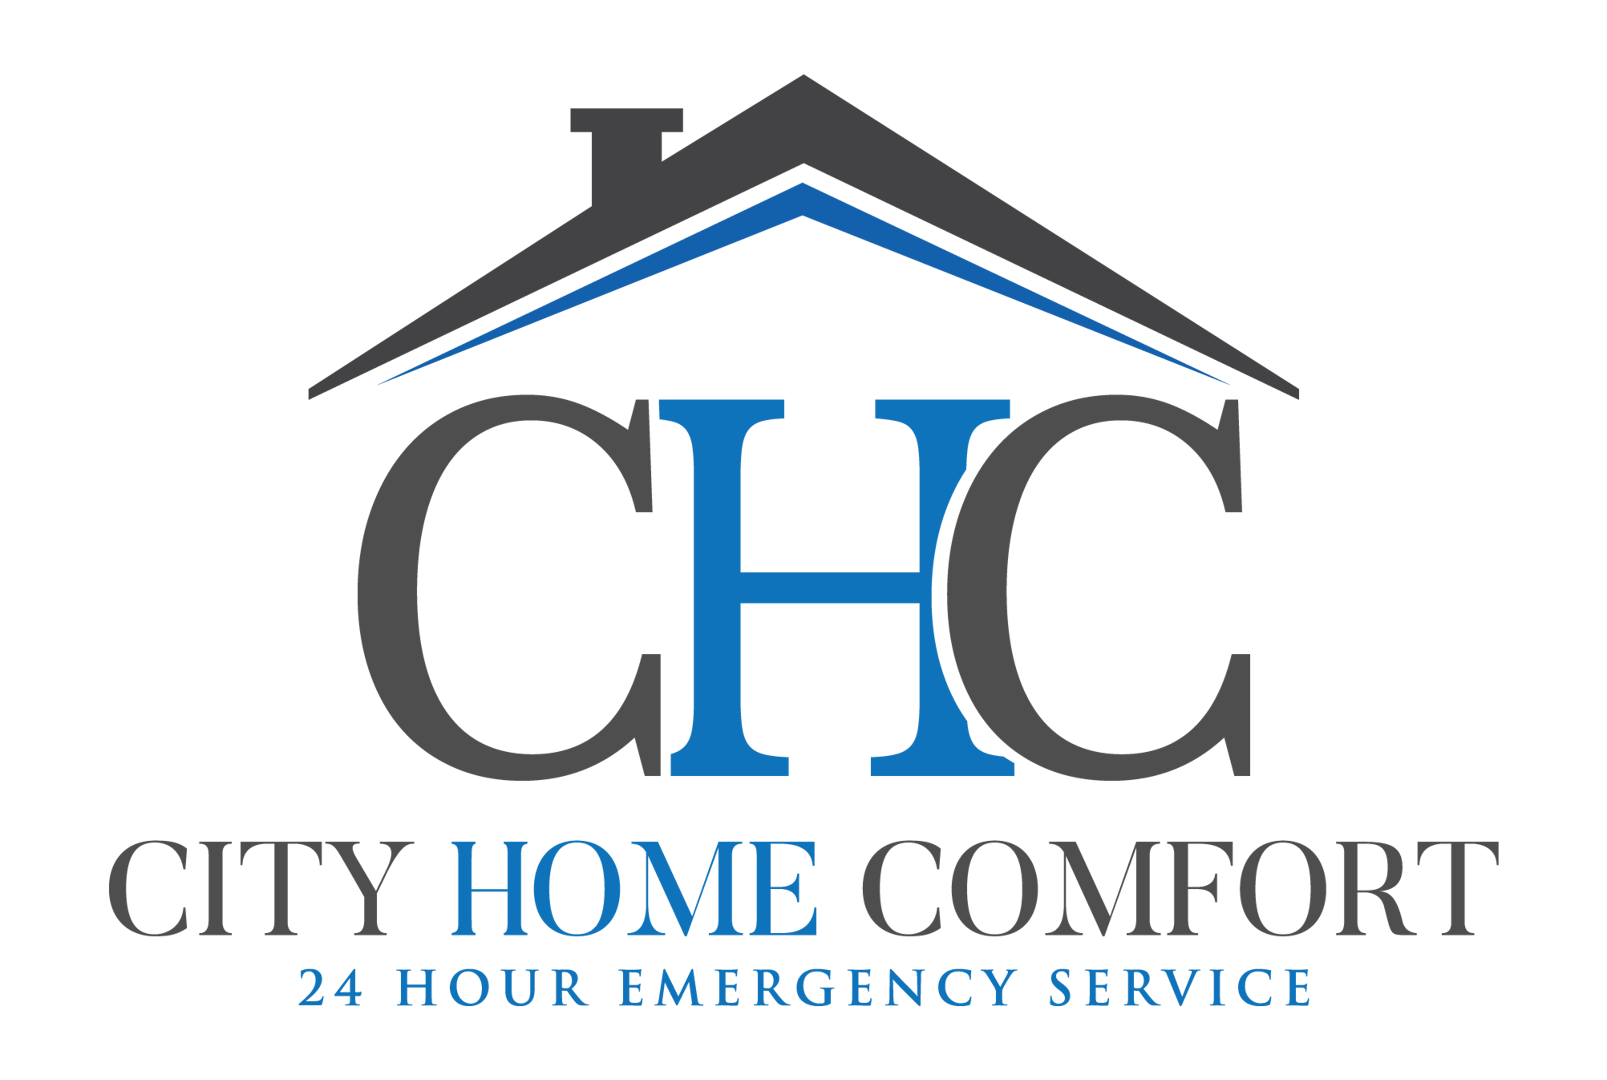 City Home Comfort's logo